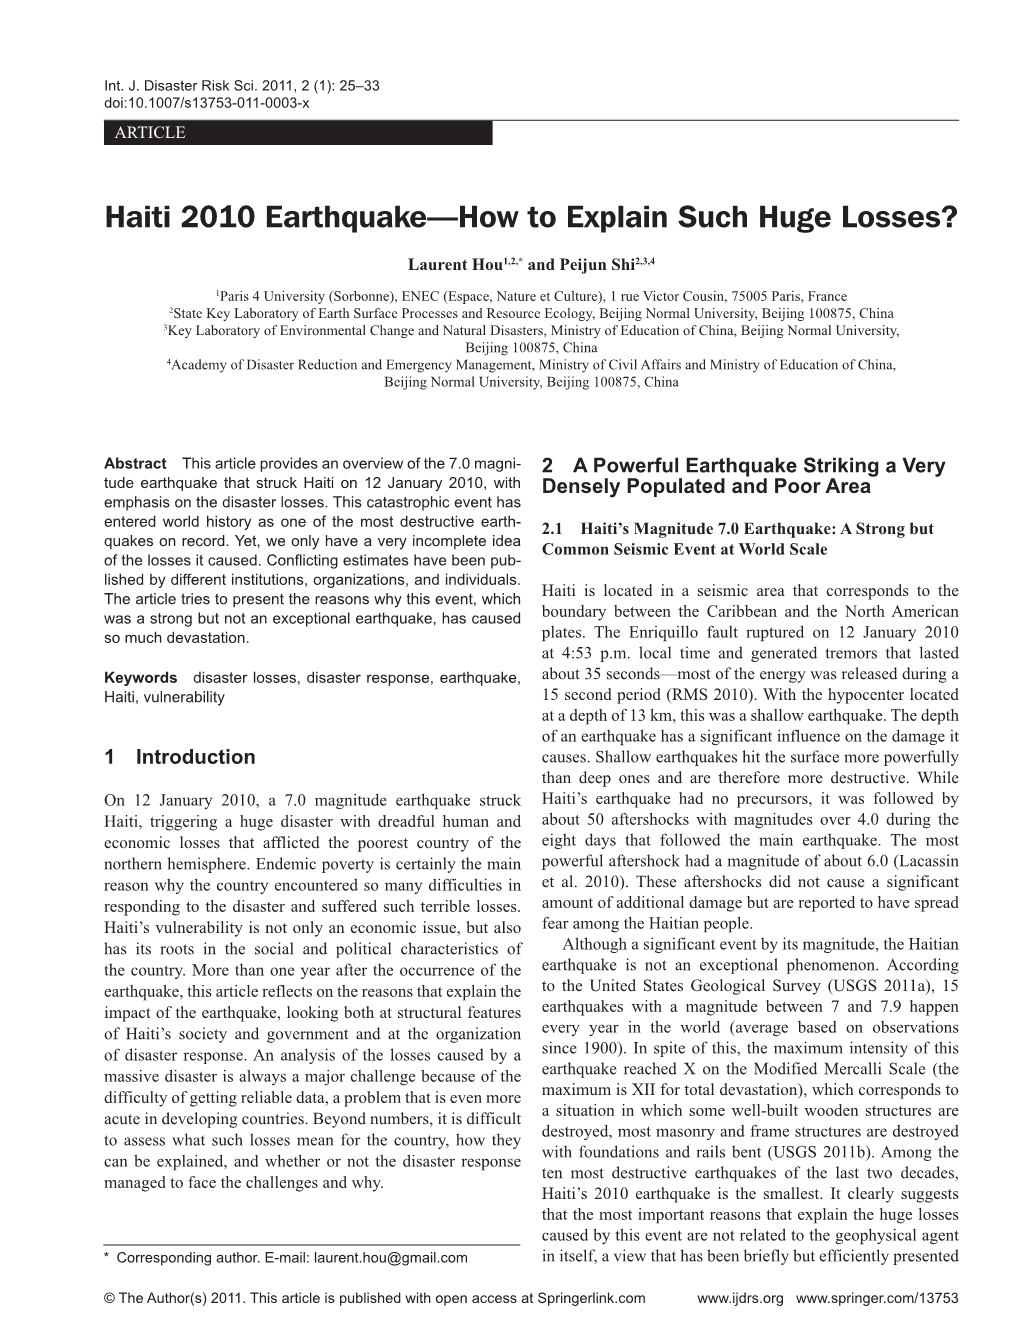 Haiti 2010 Earthquake—How to Explain Such Huge Losses?